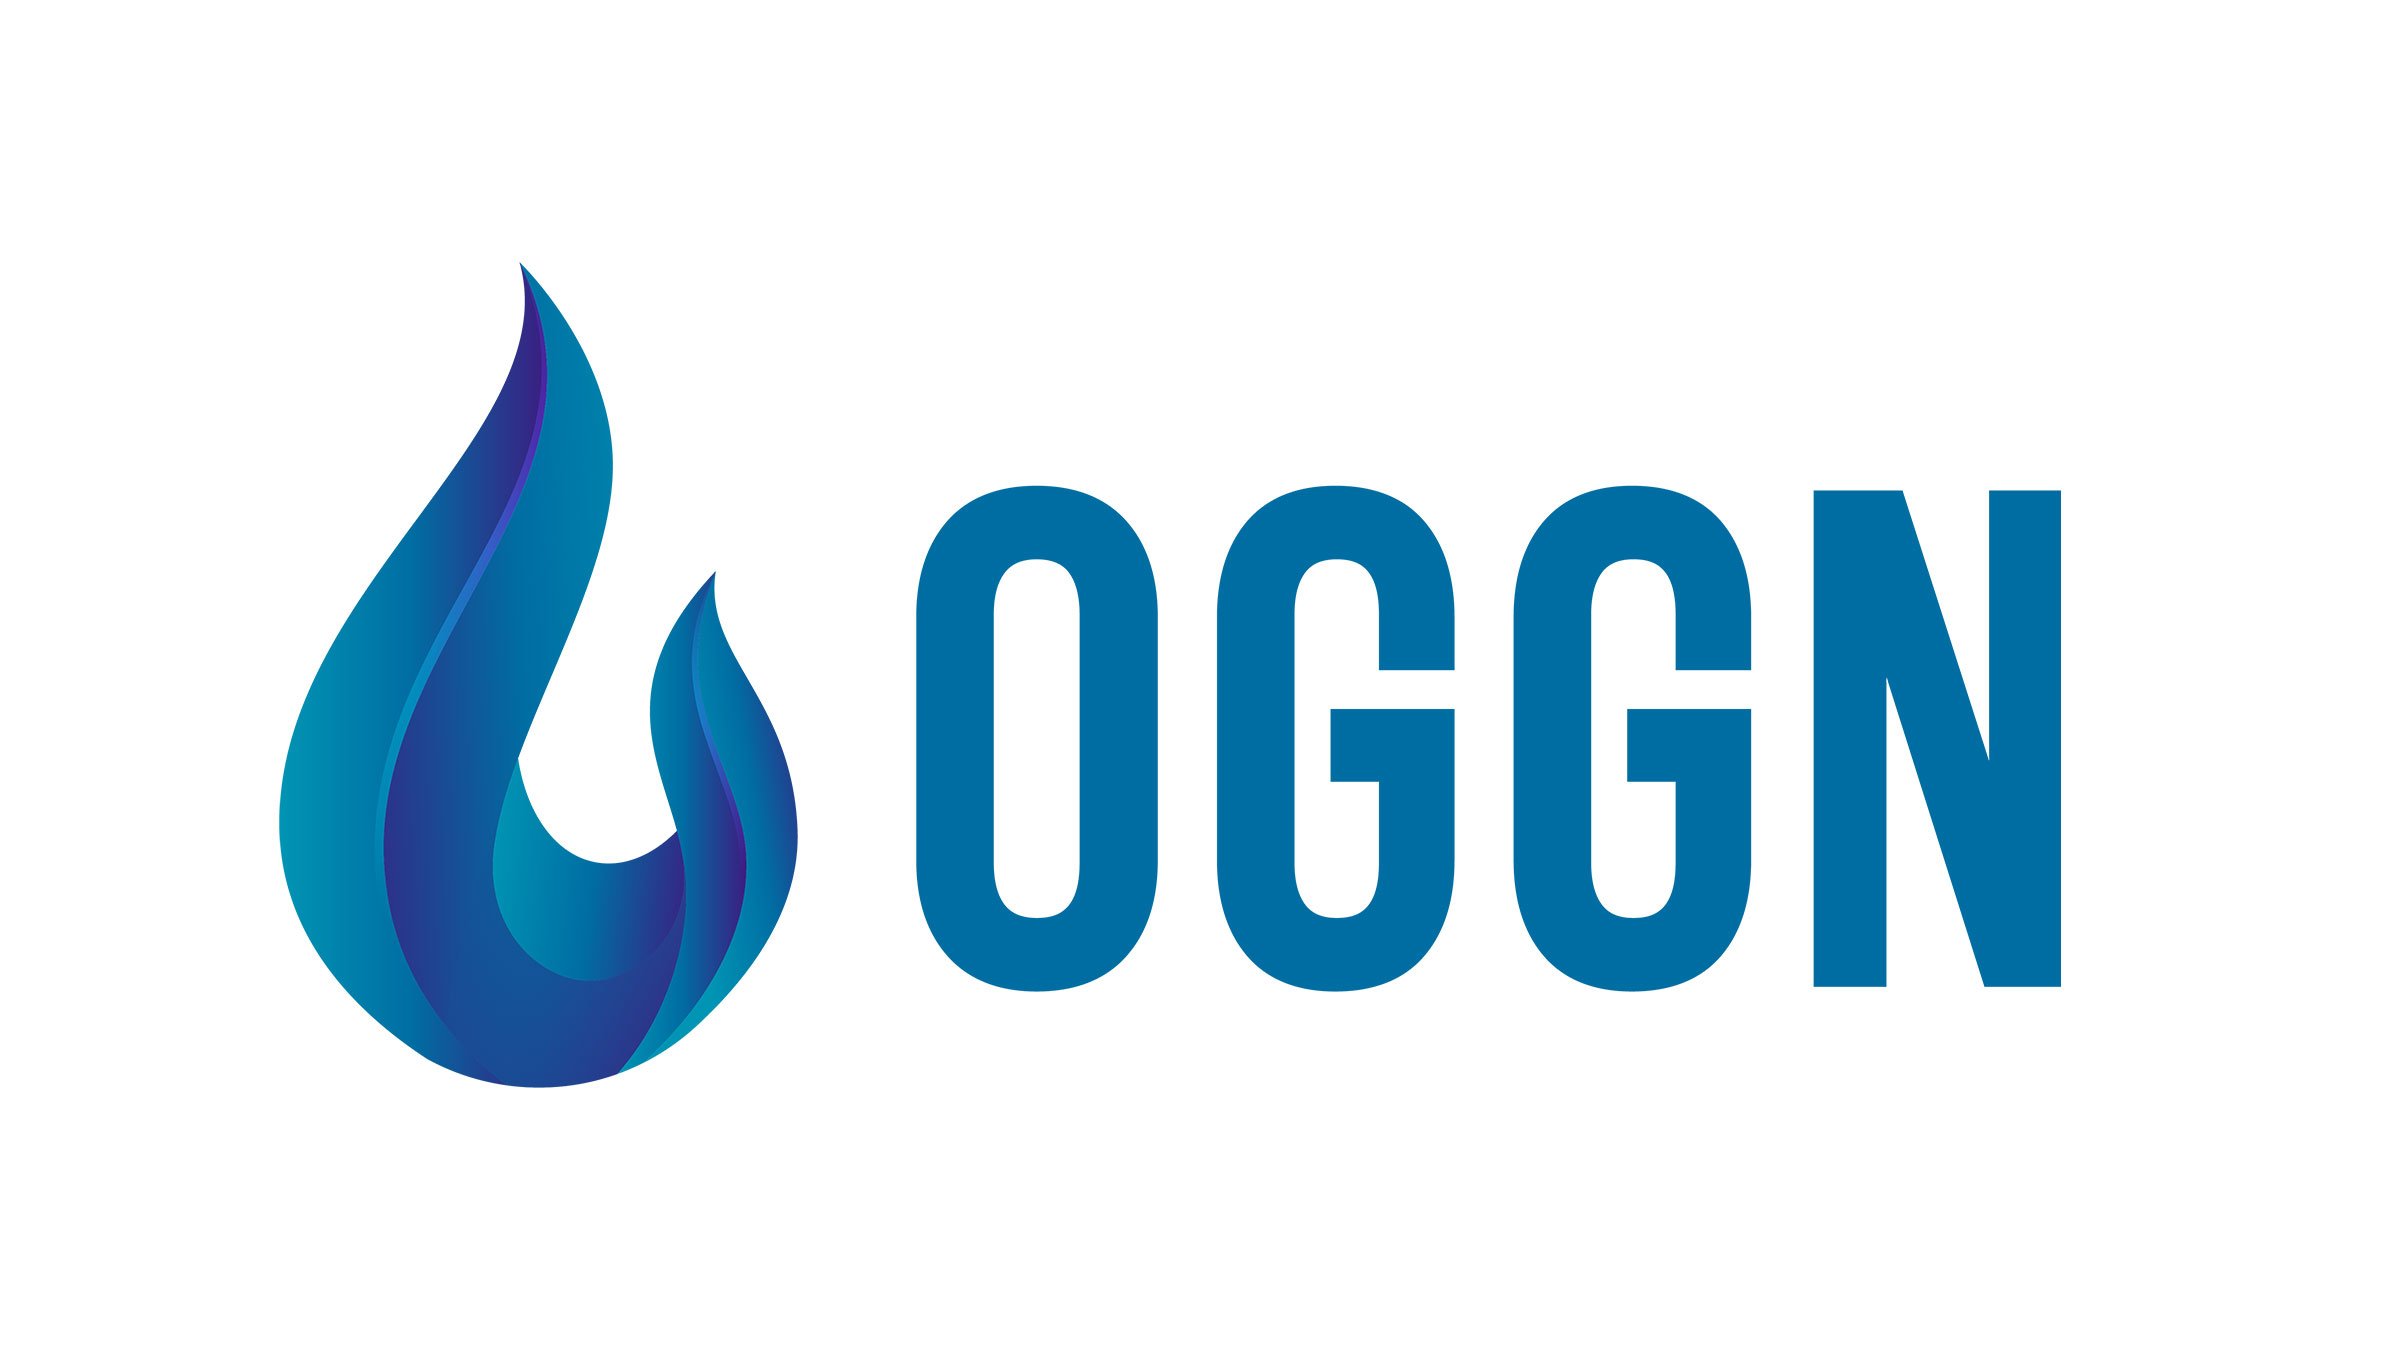 Oil & Gas Global Network logo